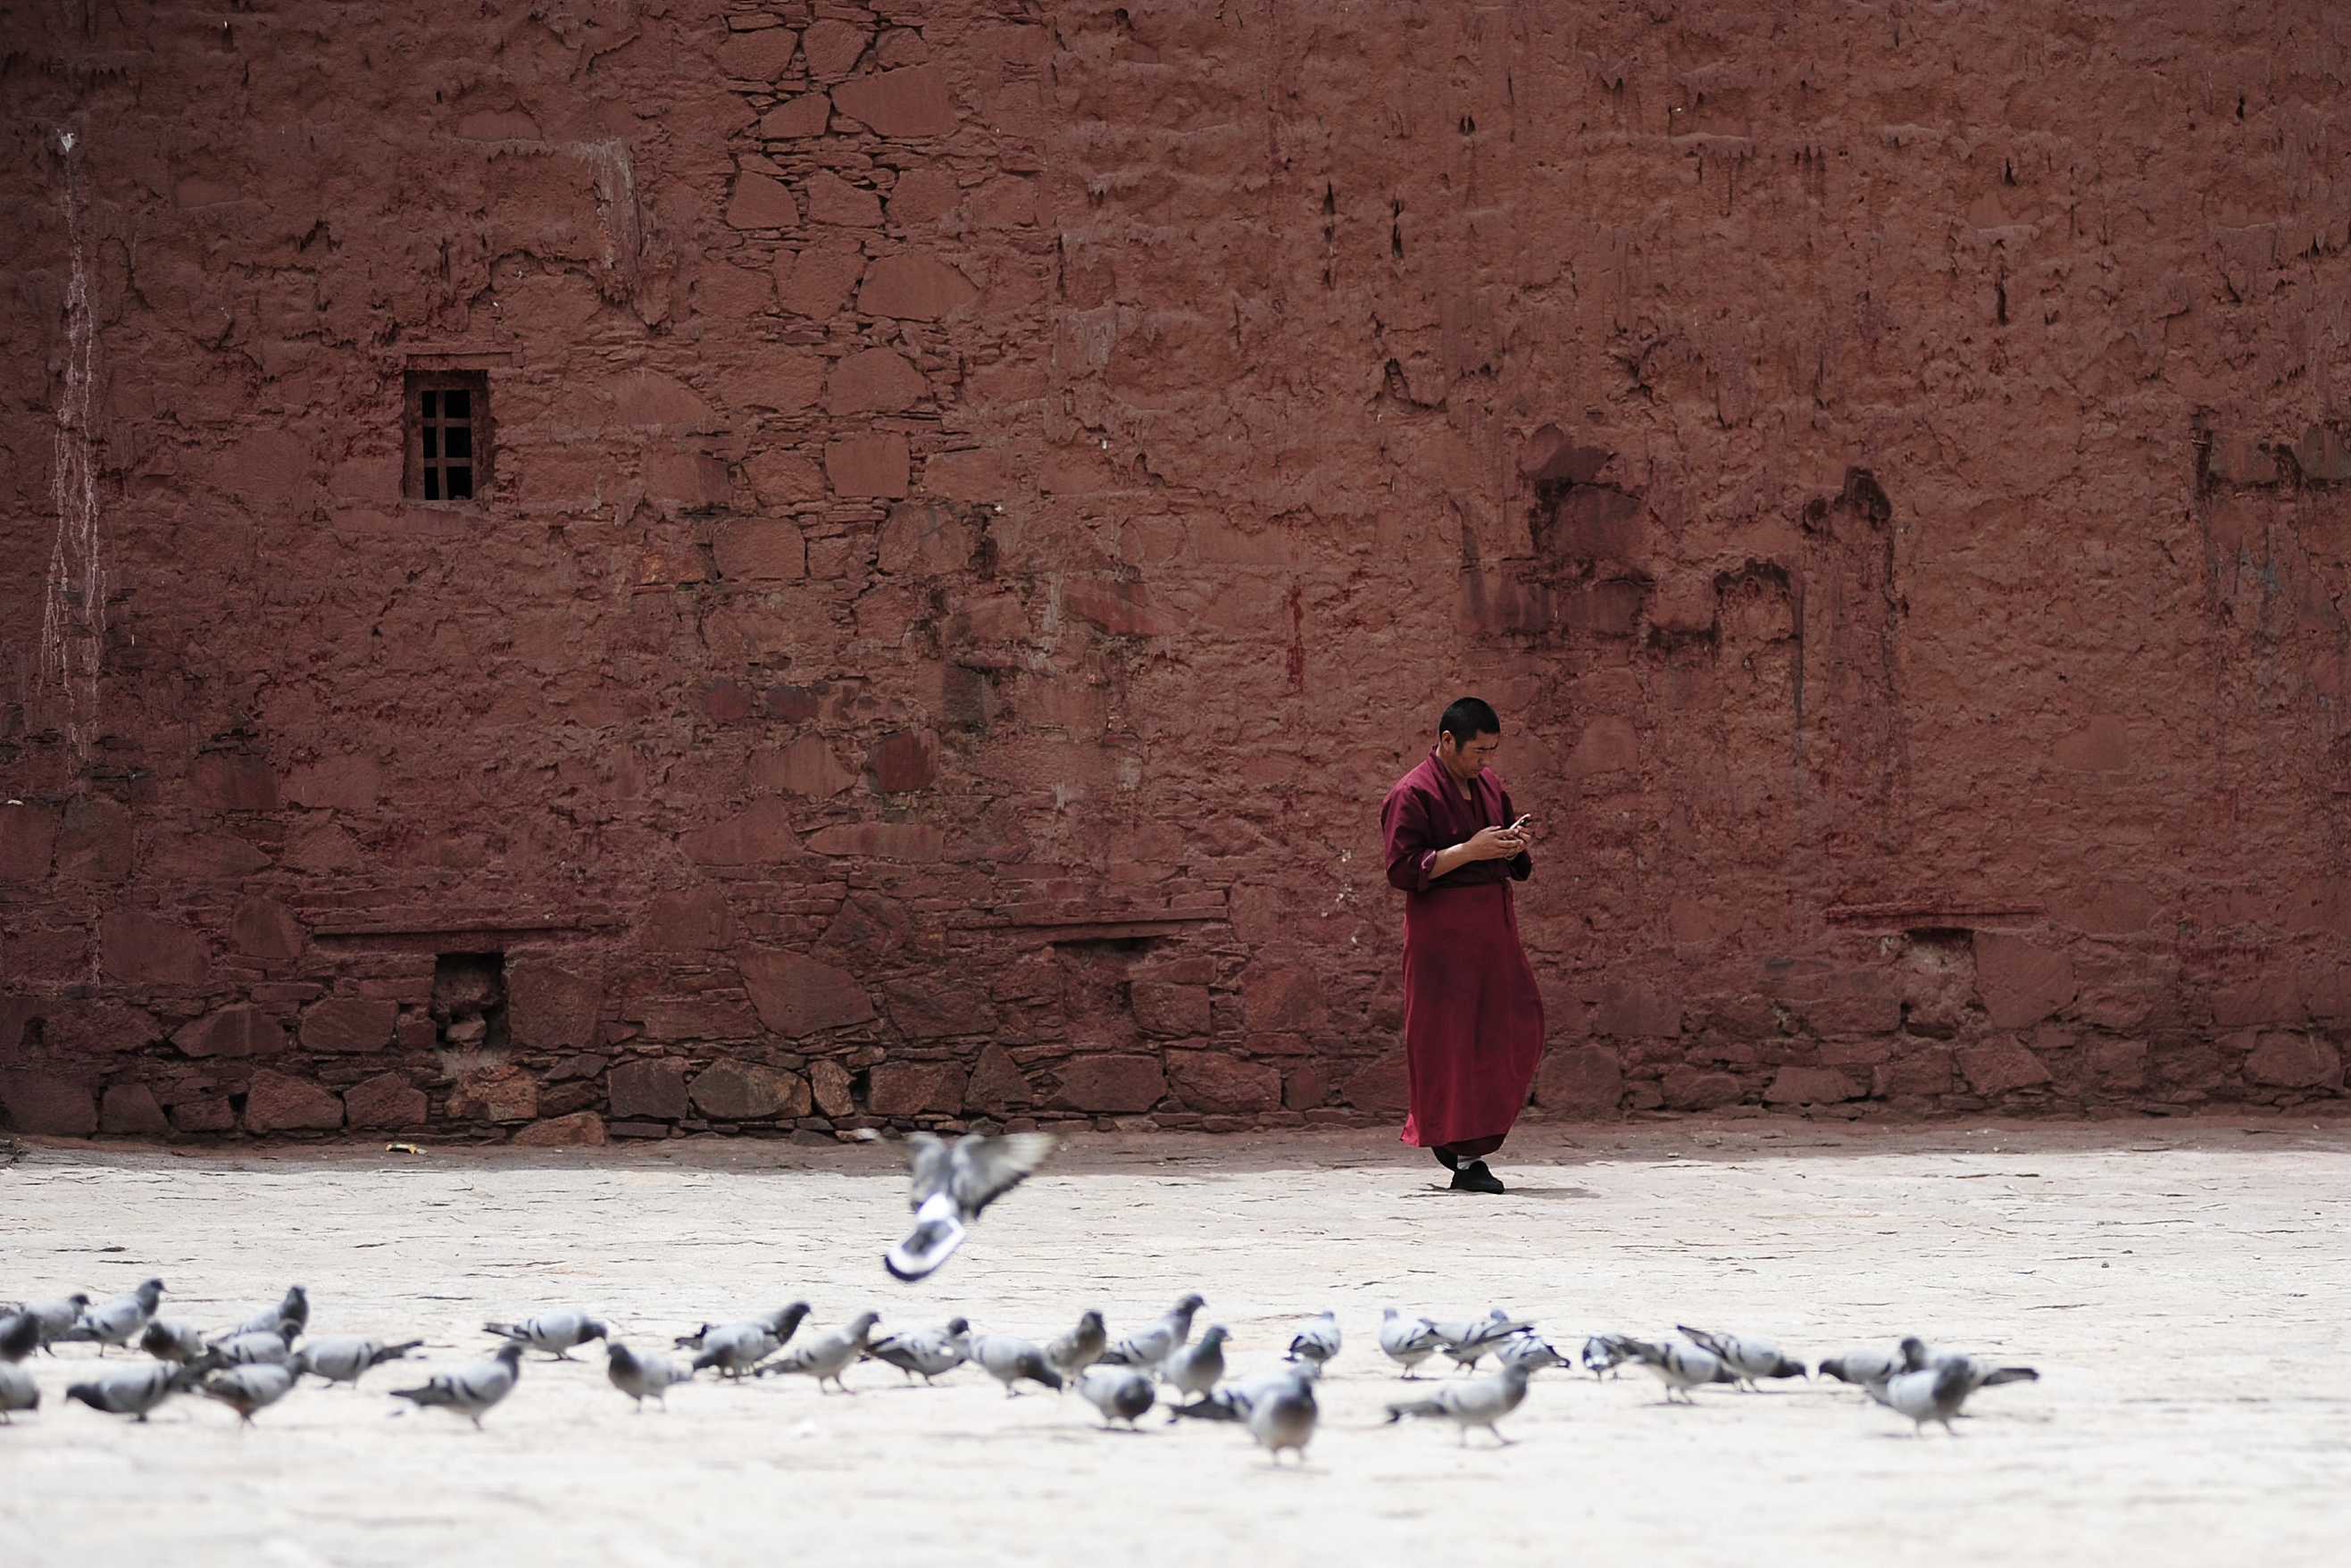 "Incienso Tibetano, Ghee, Templo Lama" DÍA 5 Regreso a Yamdrok Yumco